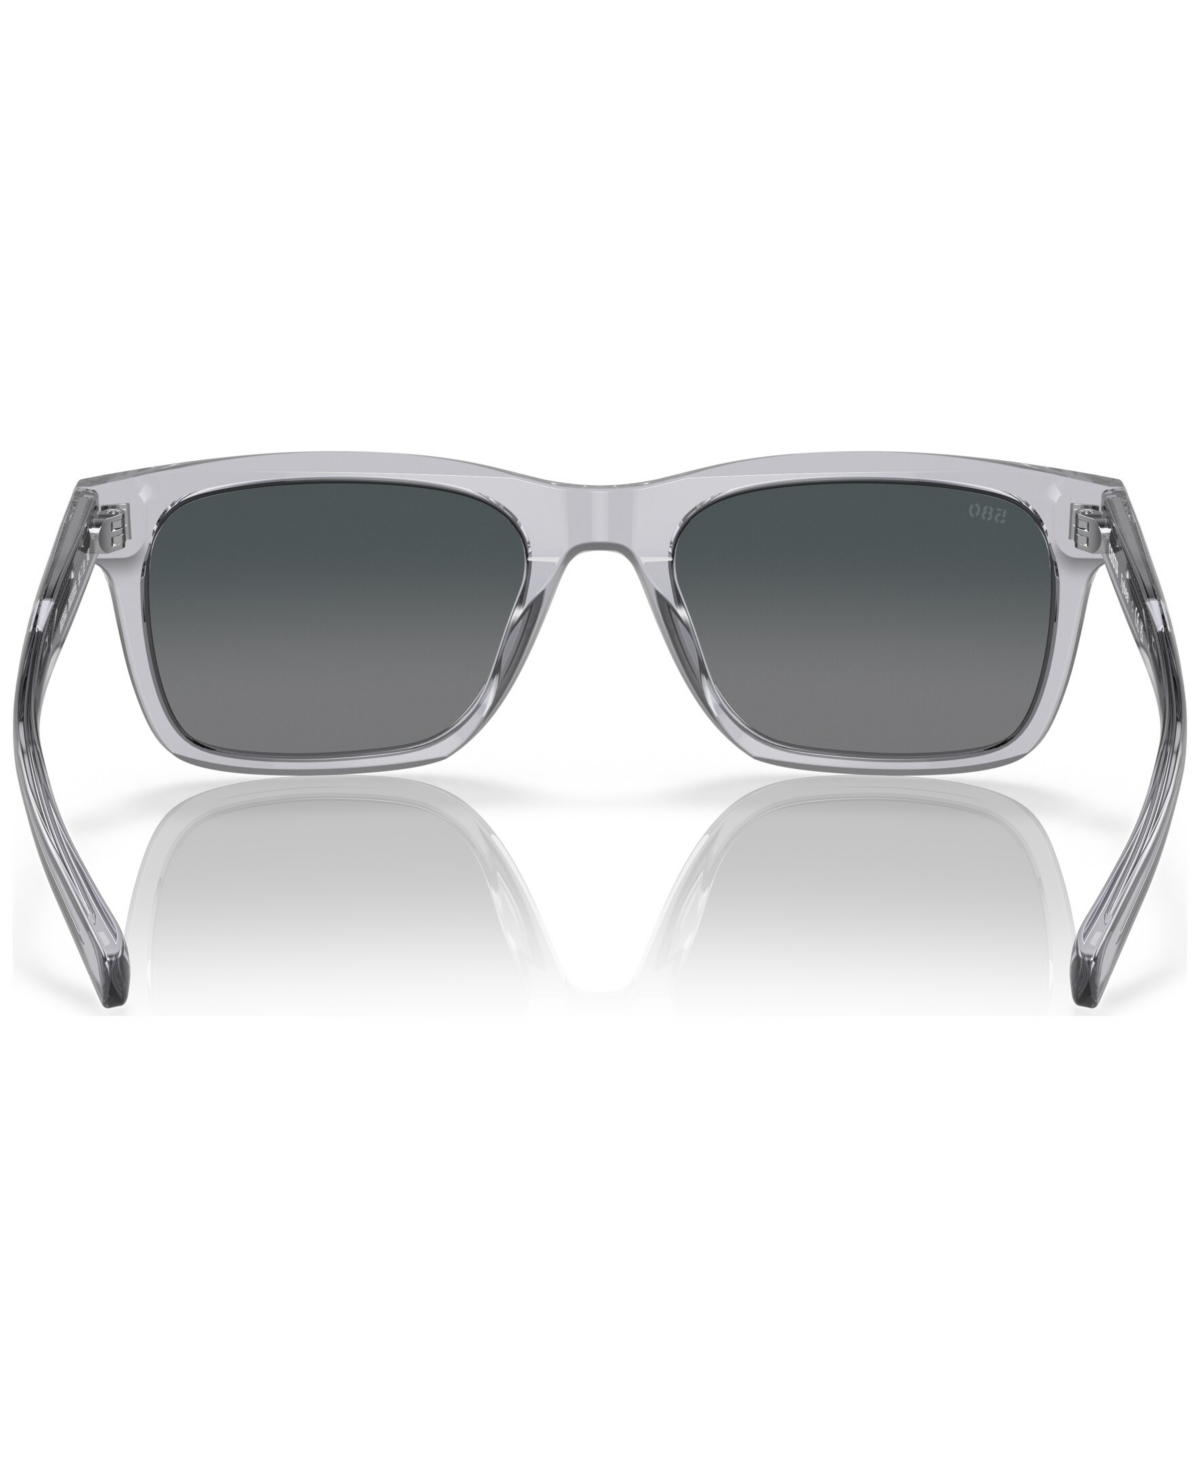 Shop Costa Del Mar Men's Polarized Sunglasses, Tybee In Shiny Light Crystal Gray